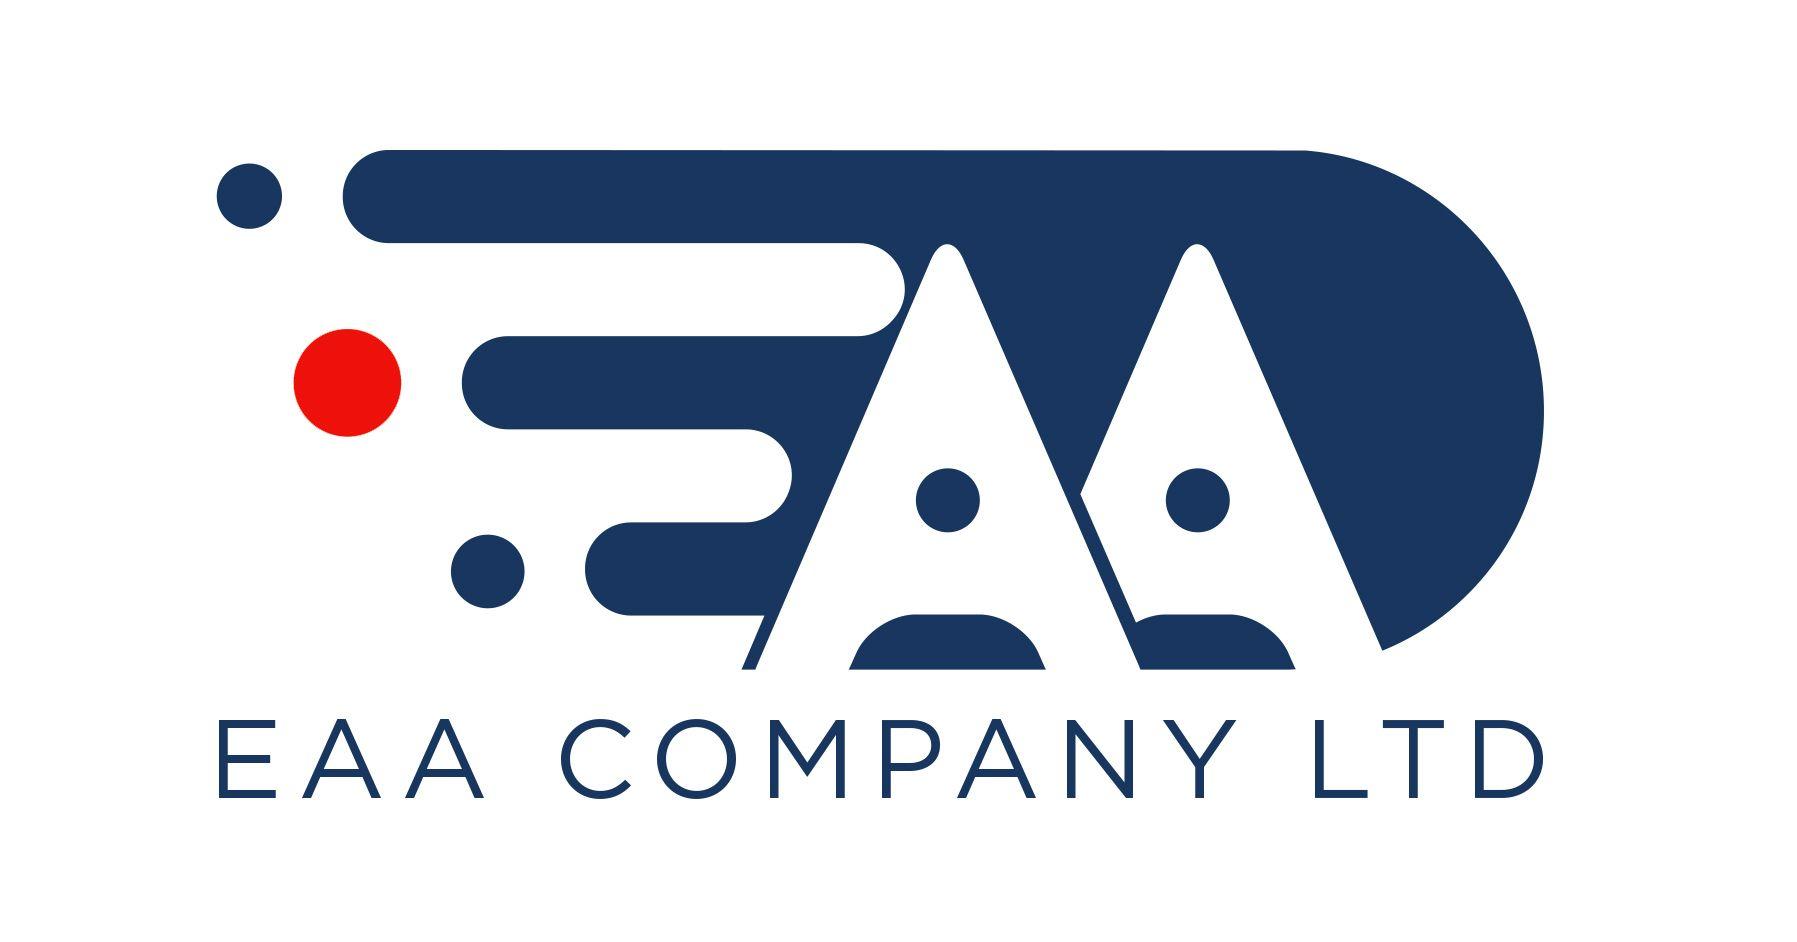 Japan Company Logo - From Japan, a new CITA full member – CITA International Motor ...